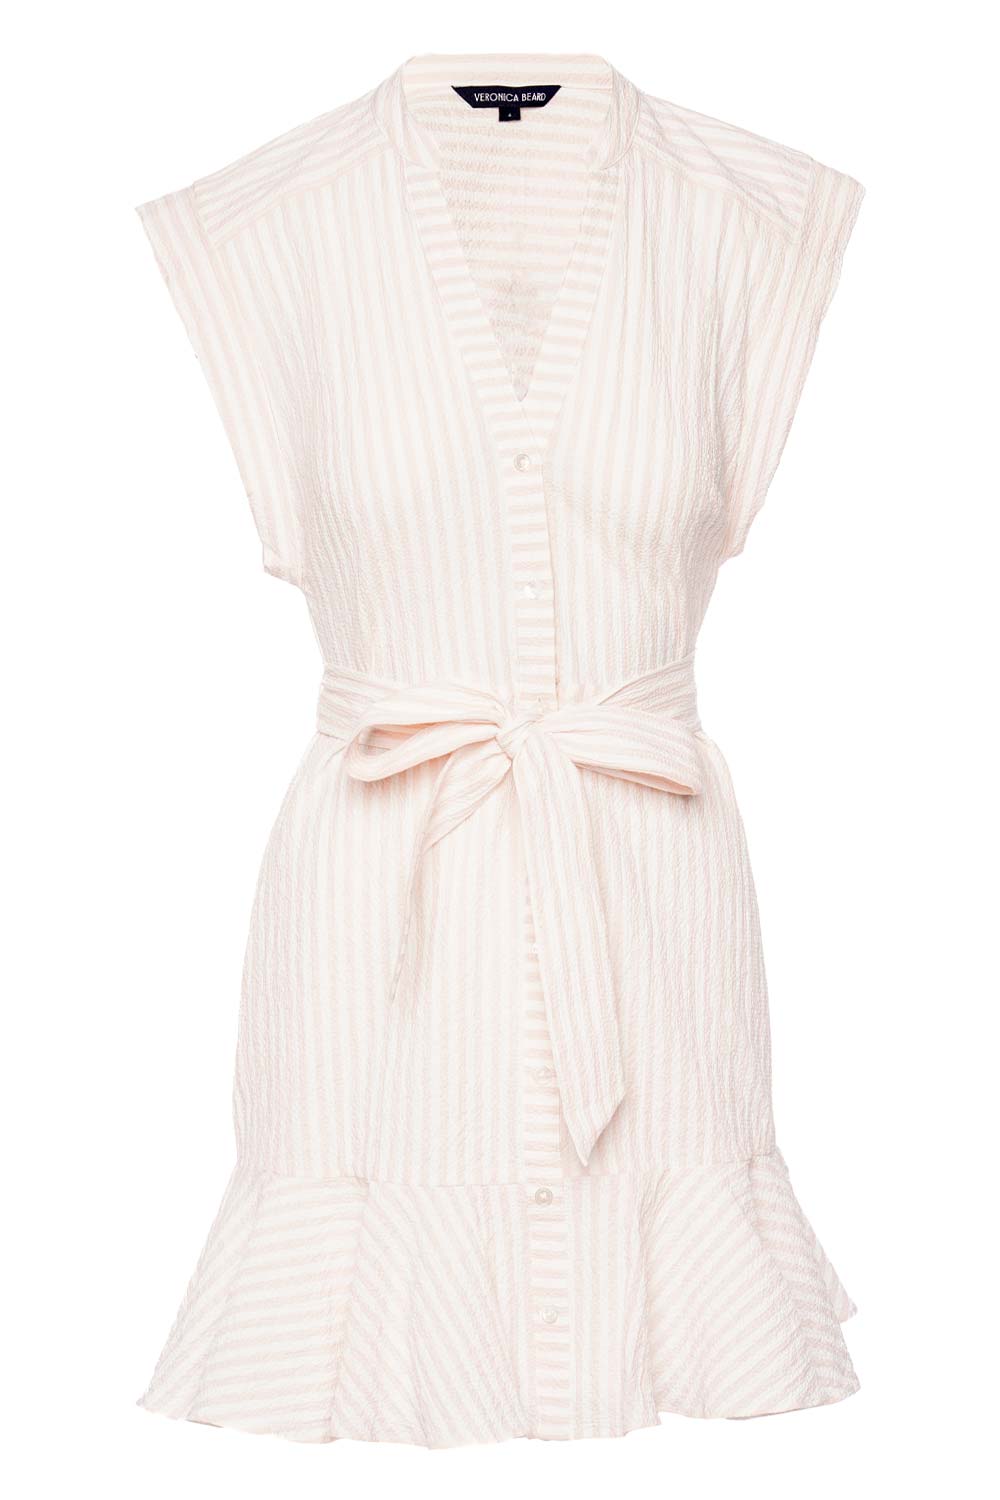 Veronica Beard Avella Stripe Belted Mini Dress